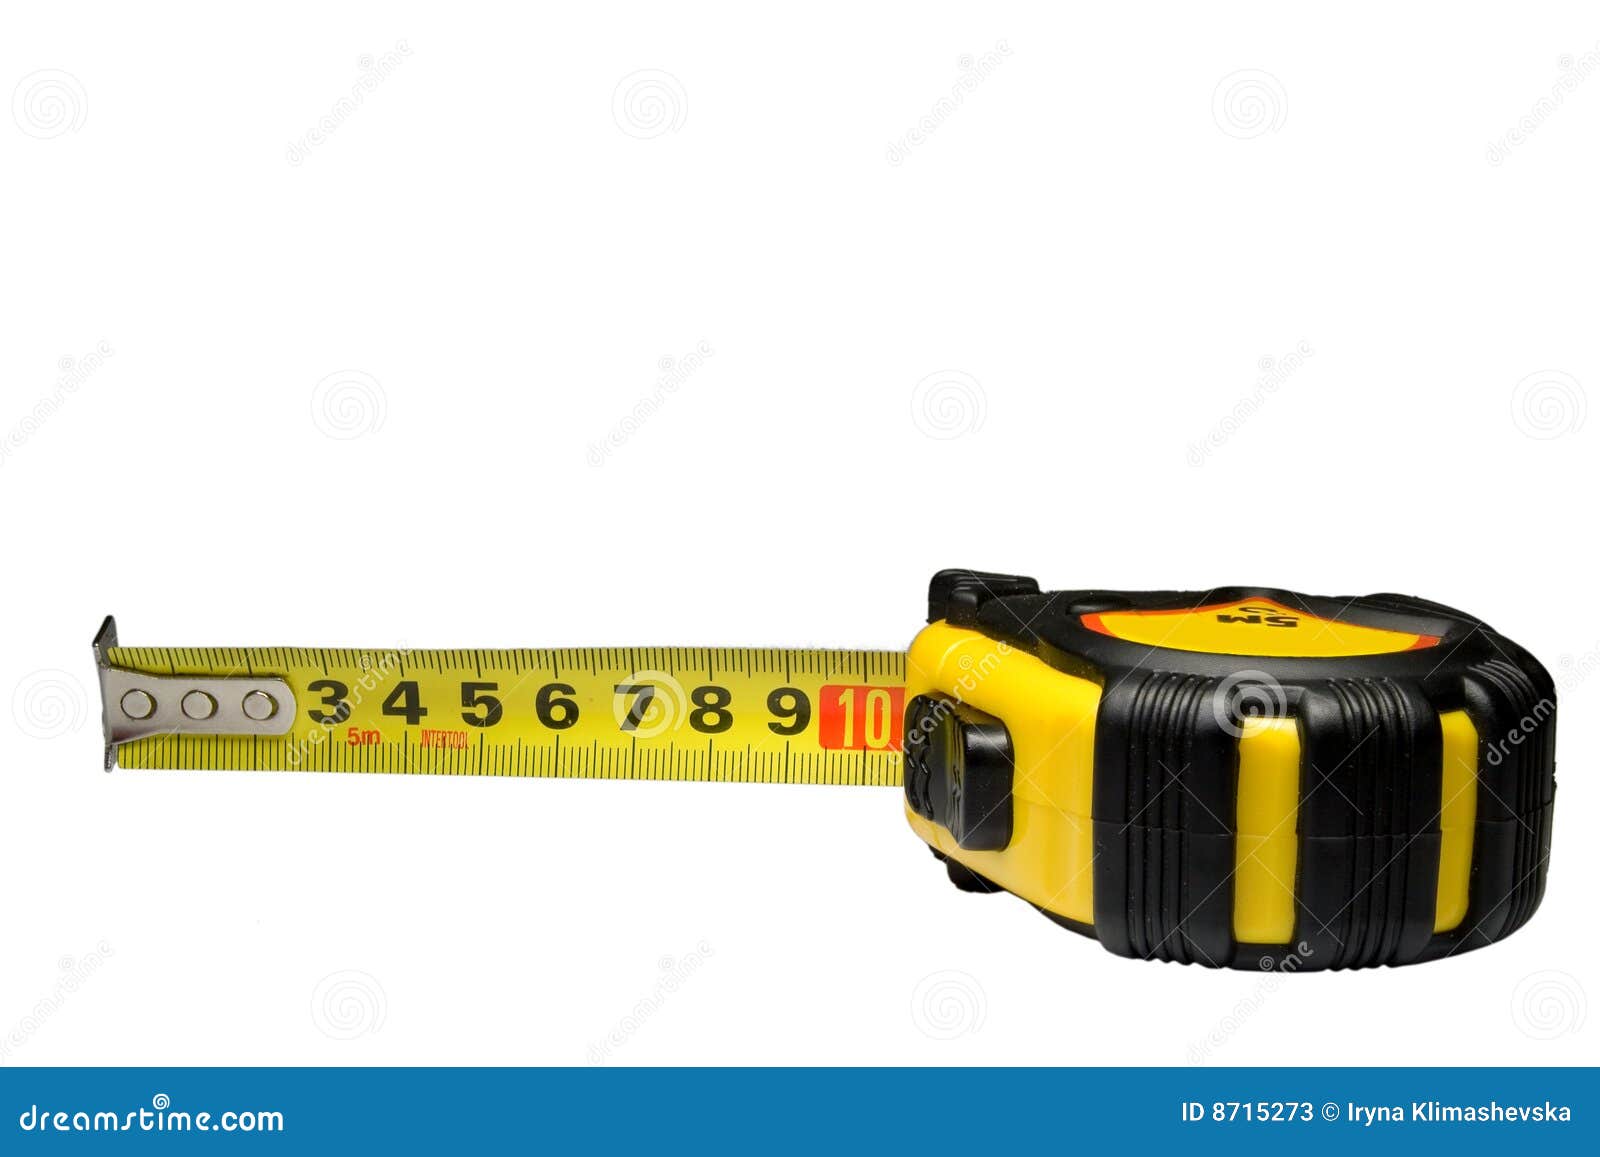 stick on measuring tape